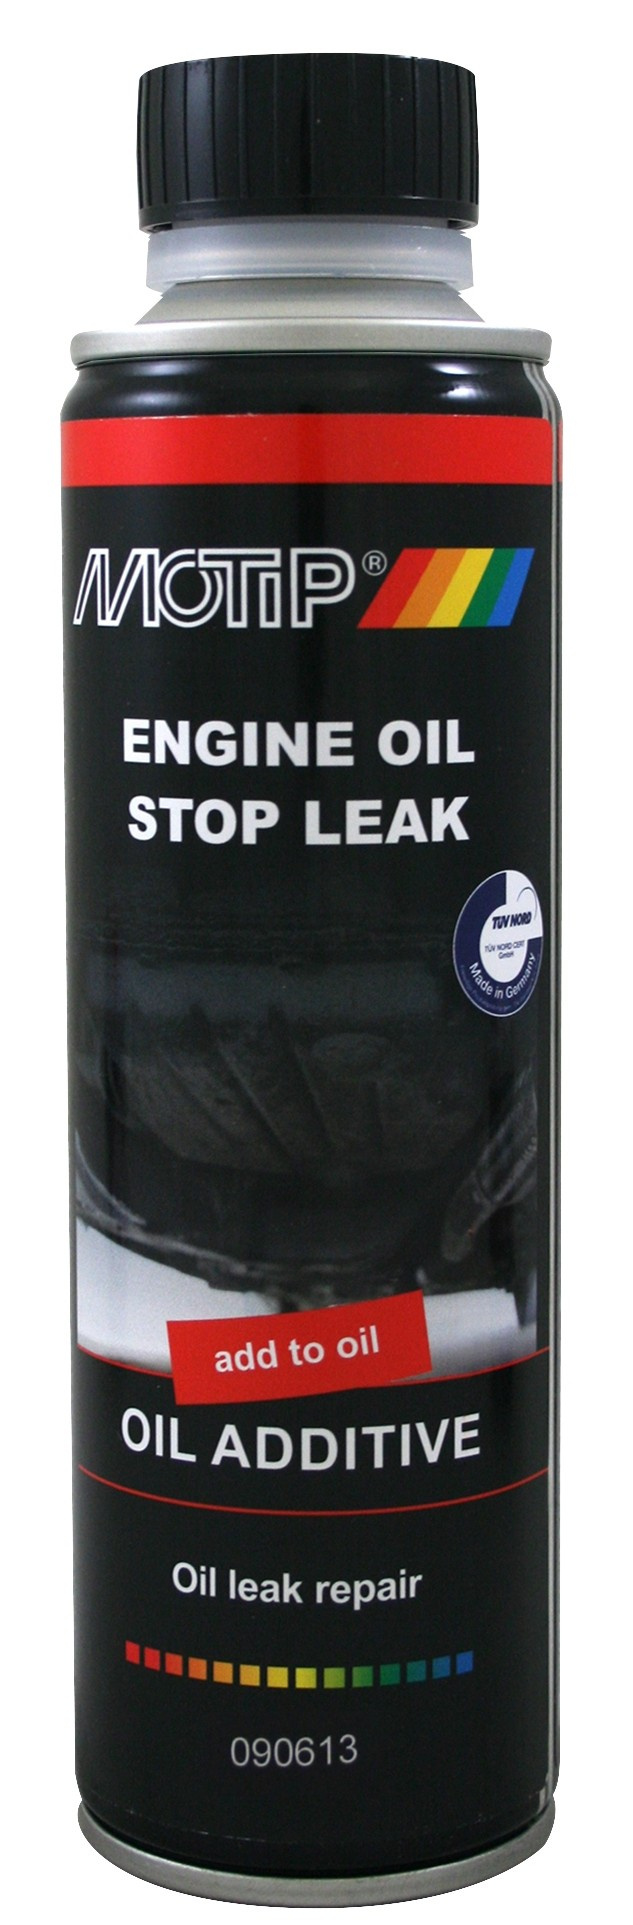 https://www.nonpaints.com/media/catalog/product/cache/5c462209641c493e8b11362149a0e638/m/o/motip-engine-oil-stop-leak-090613.jpg